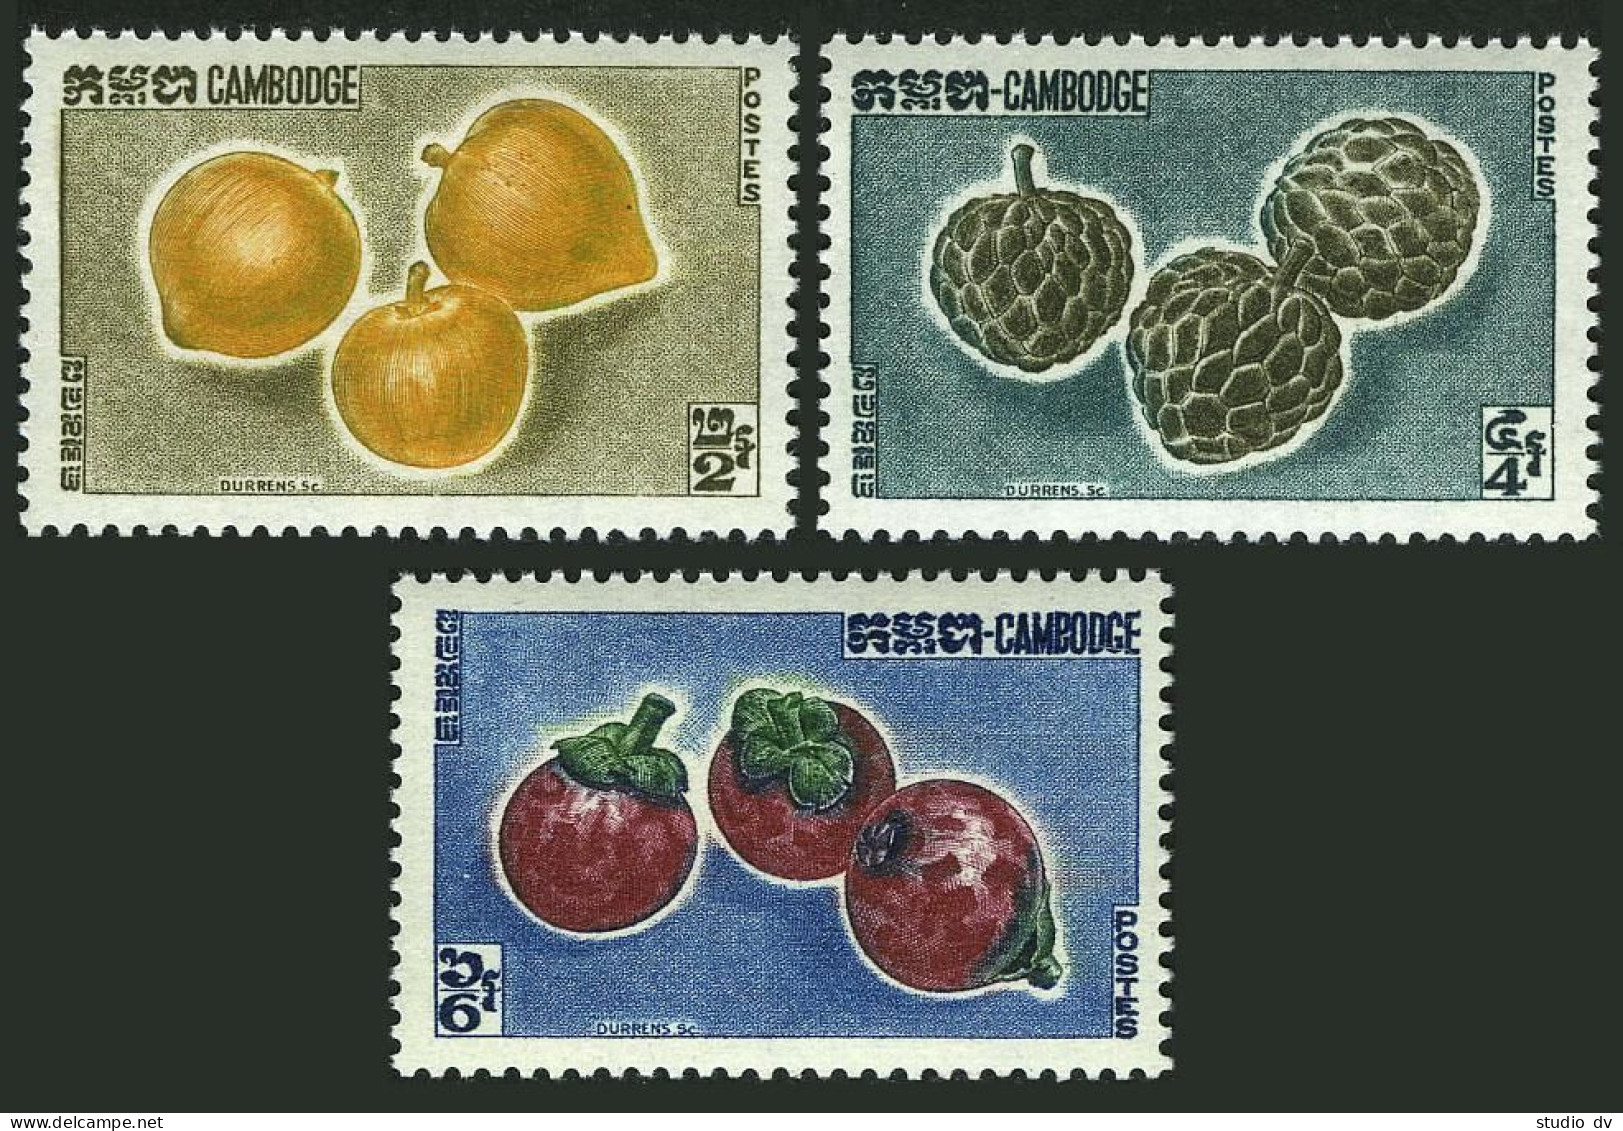 Cambodia 109-111,hinged.Mi 140-142. Fruit,1962.Turmeric,Cinnamon,Mangosteens. - Cambodia